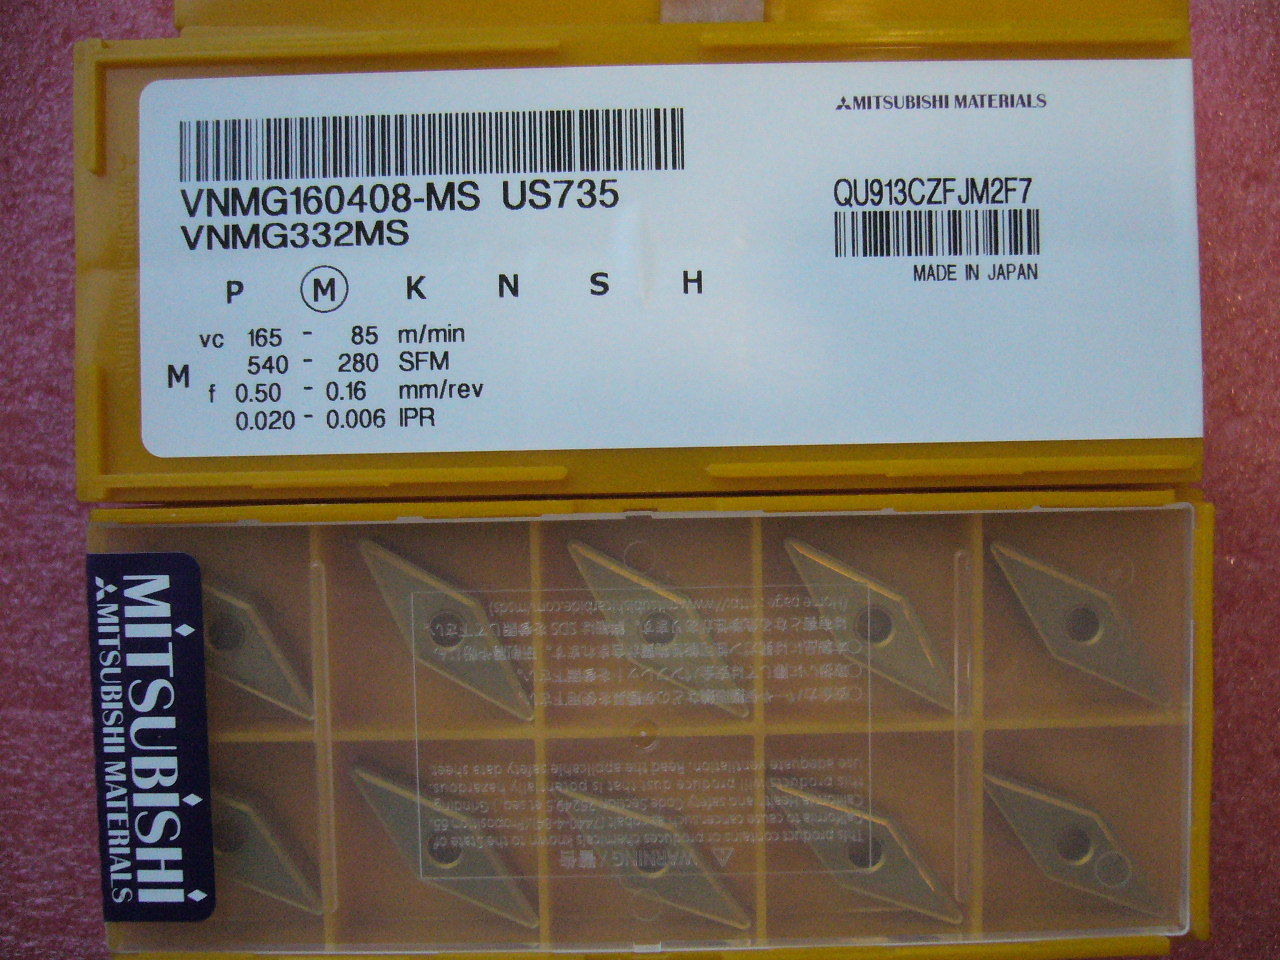 QTY 10x Mitsubishi VNMG332MS VNMG160408-MS US735 NEW